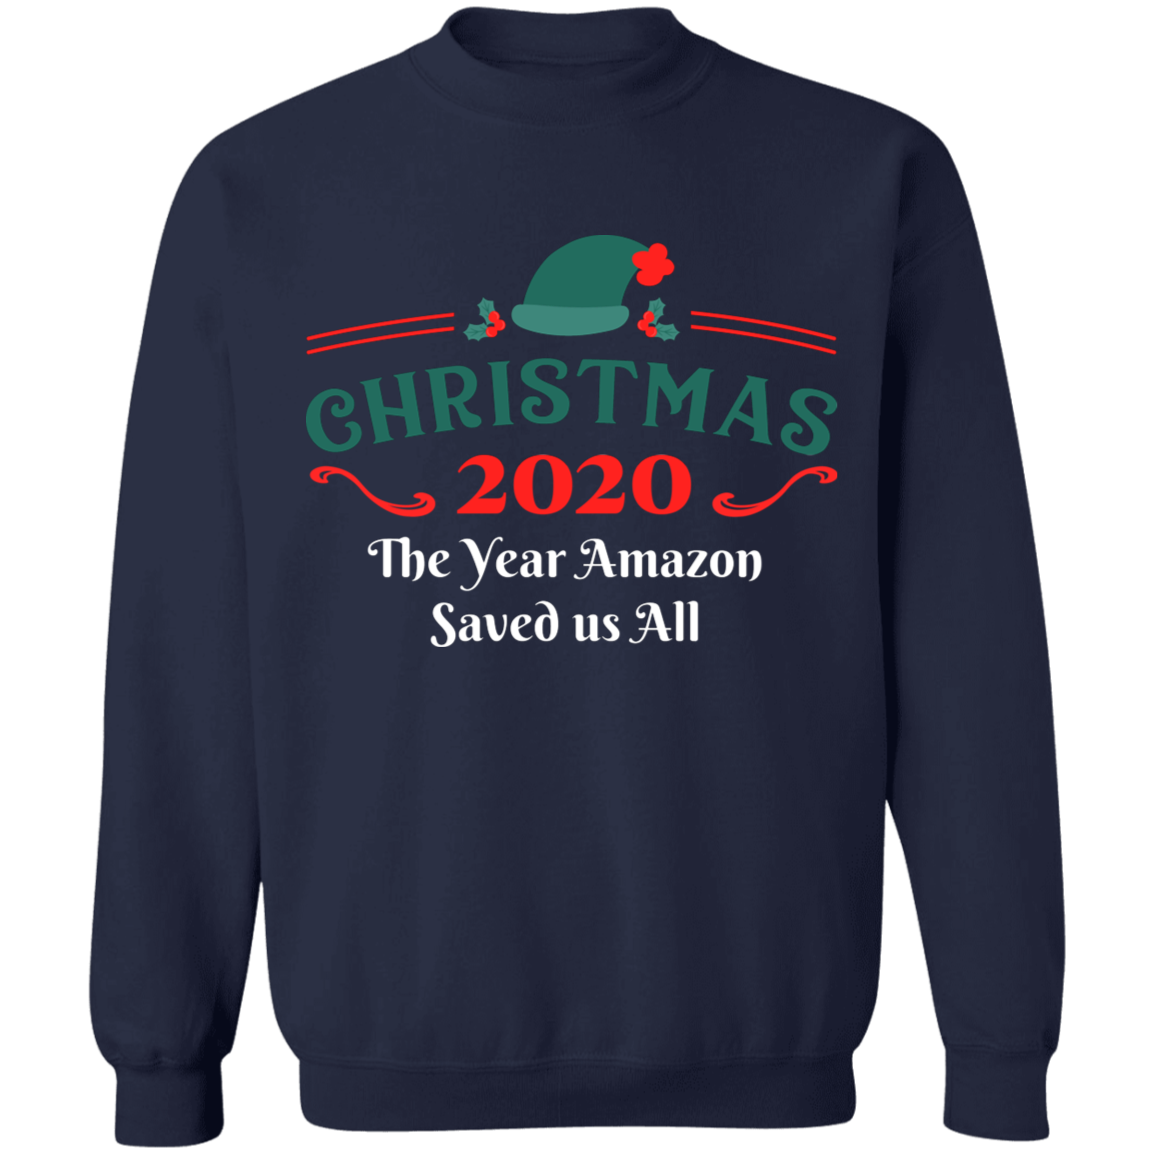 Christmas 2020 The Year Amazon Saved us All Sweatshirt